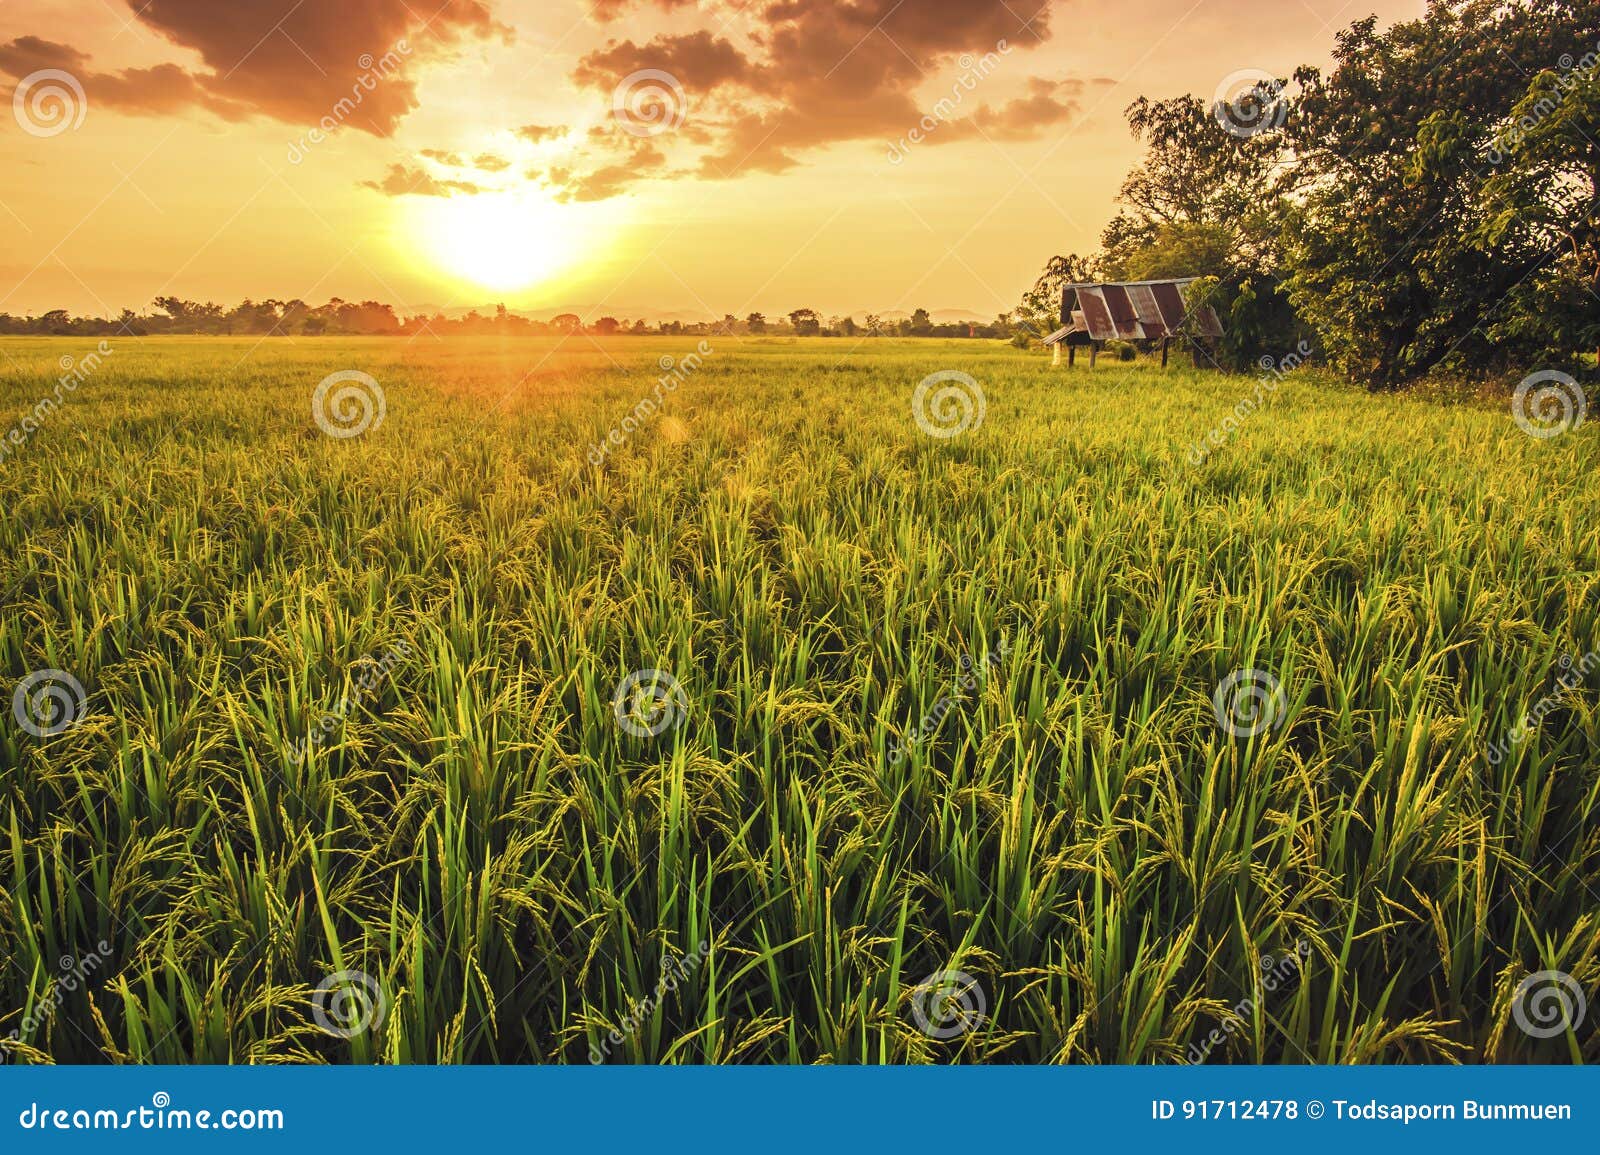 landscap of rice field and sun set